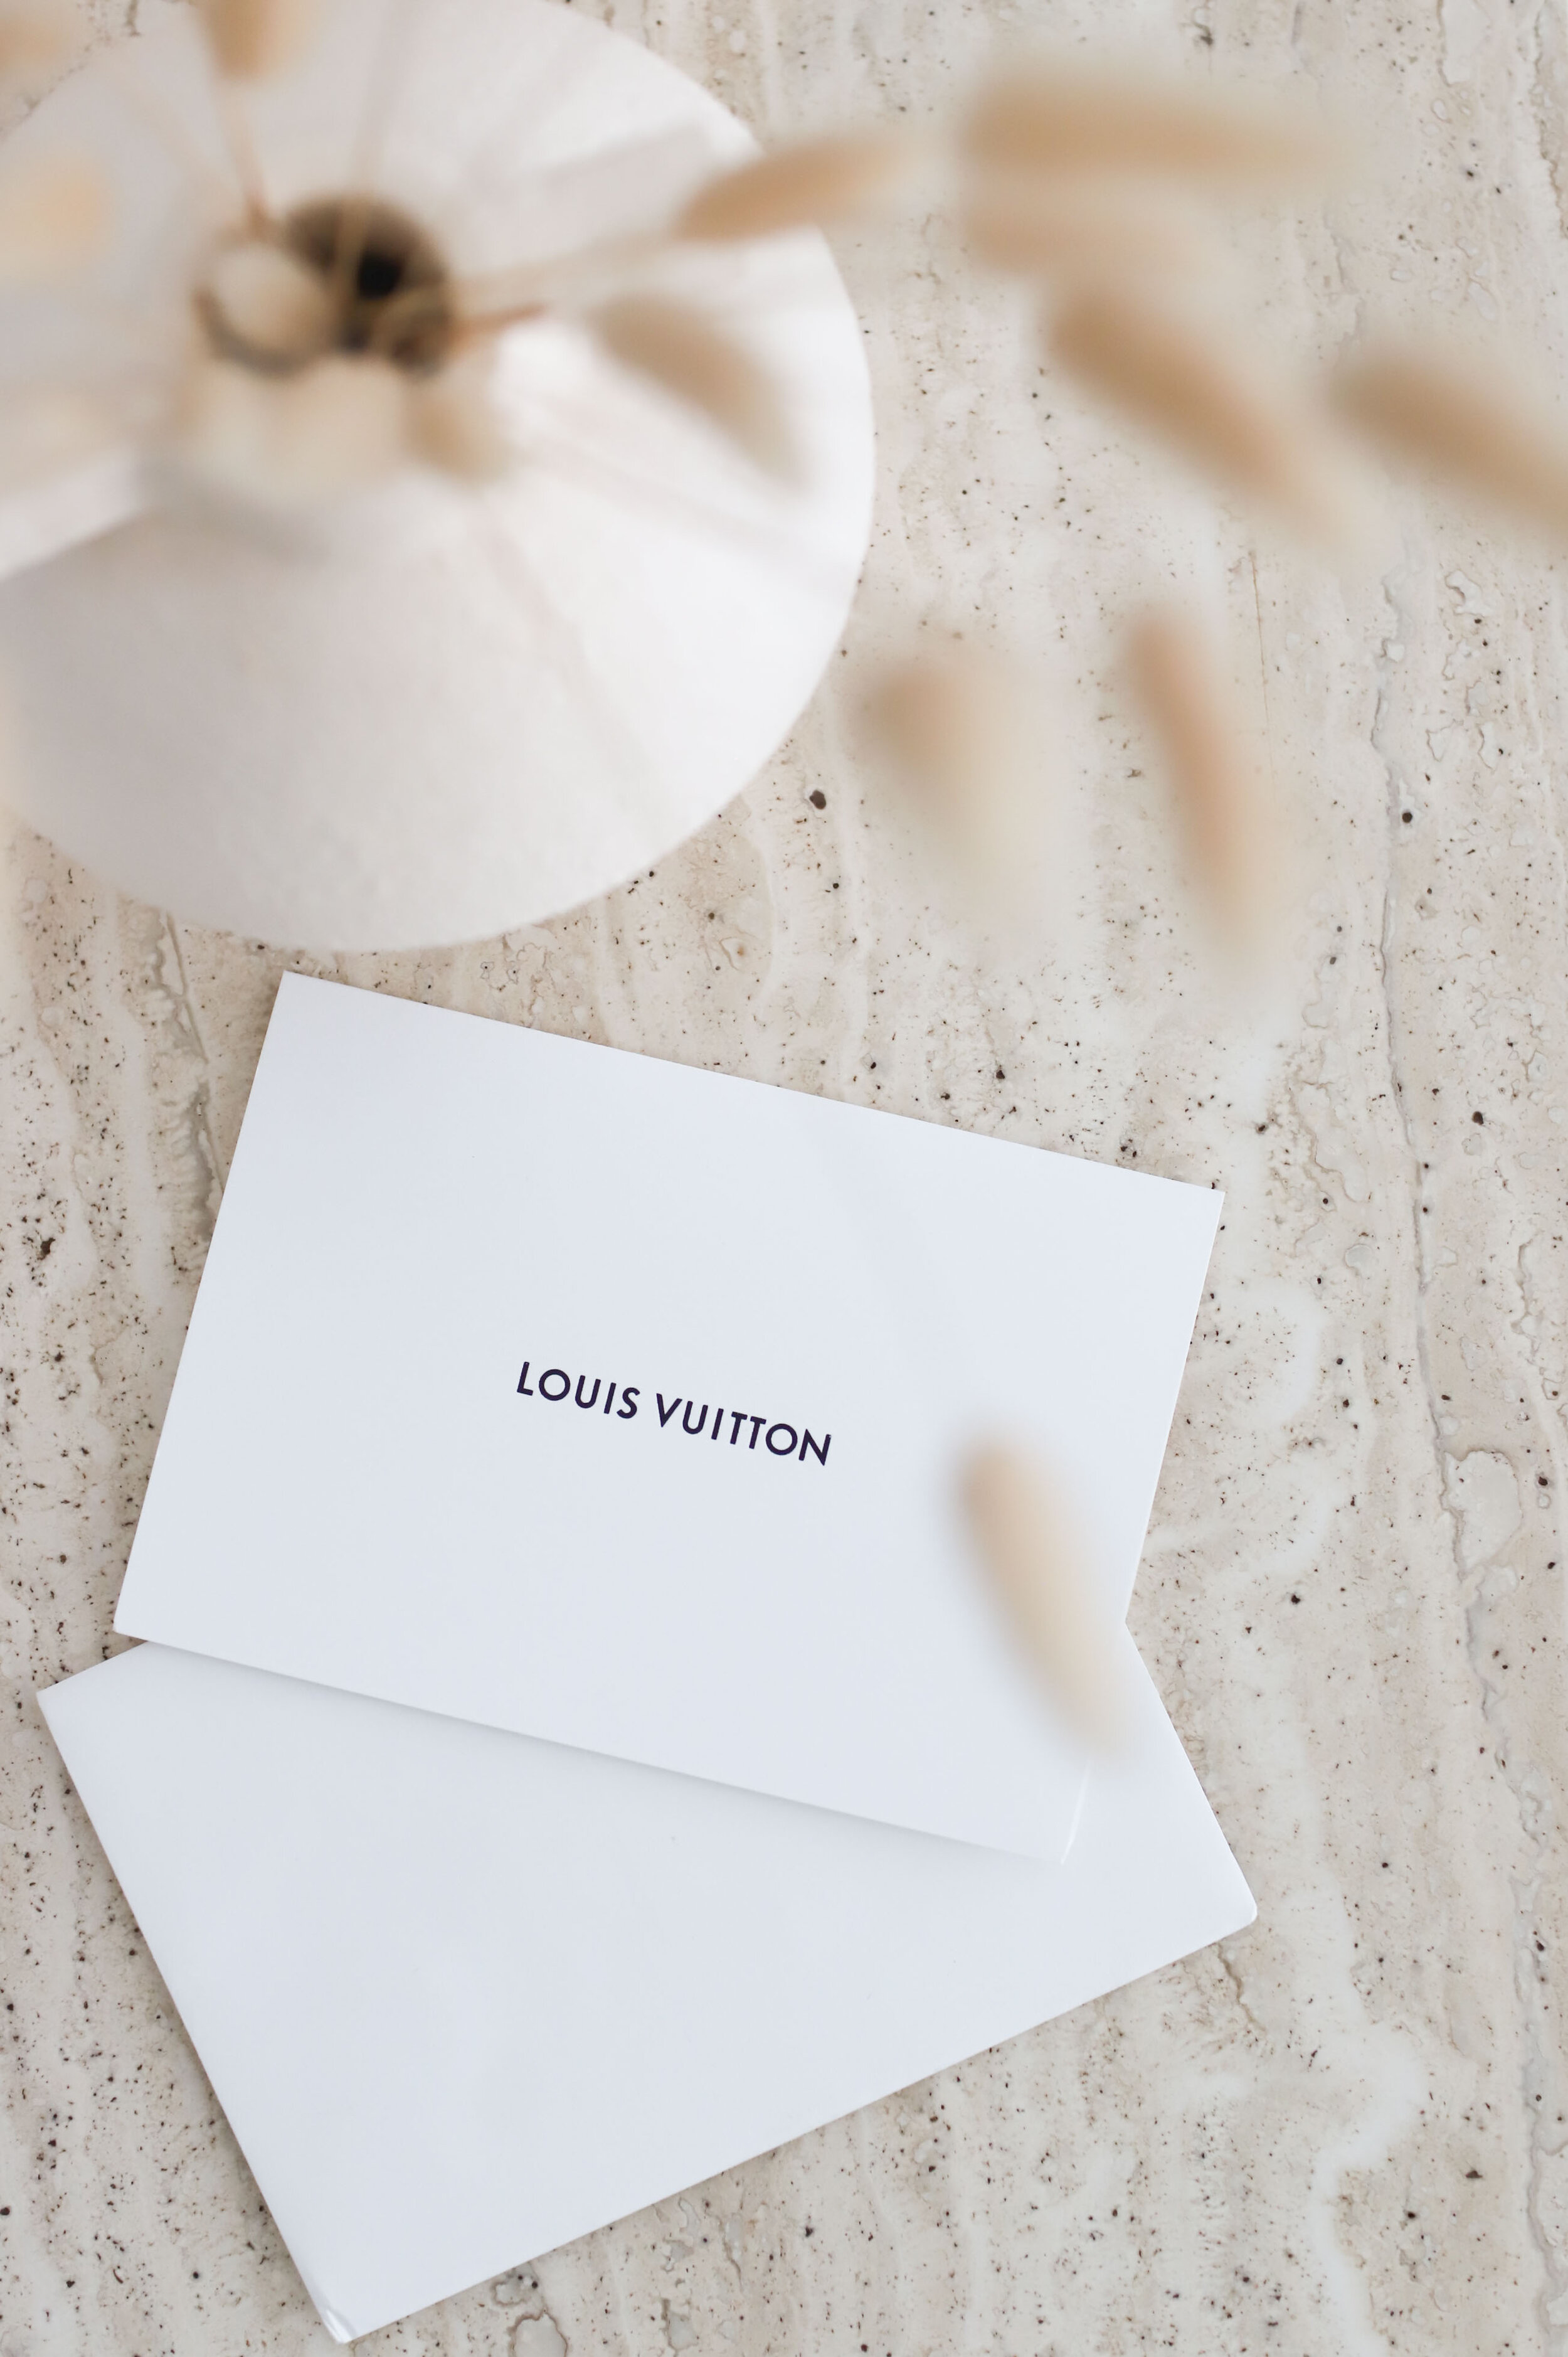 On the Beach  Louis Vuitton — MUSINGS OF LI CHI PAN